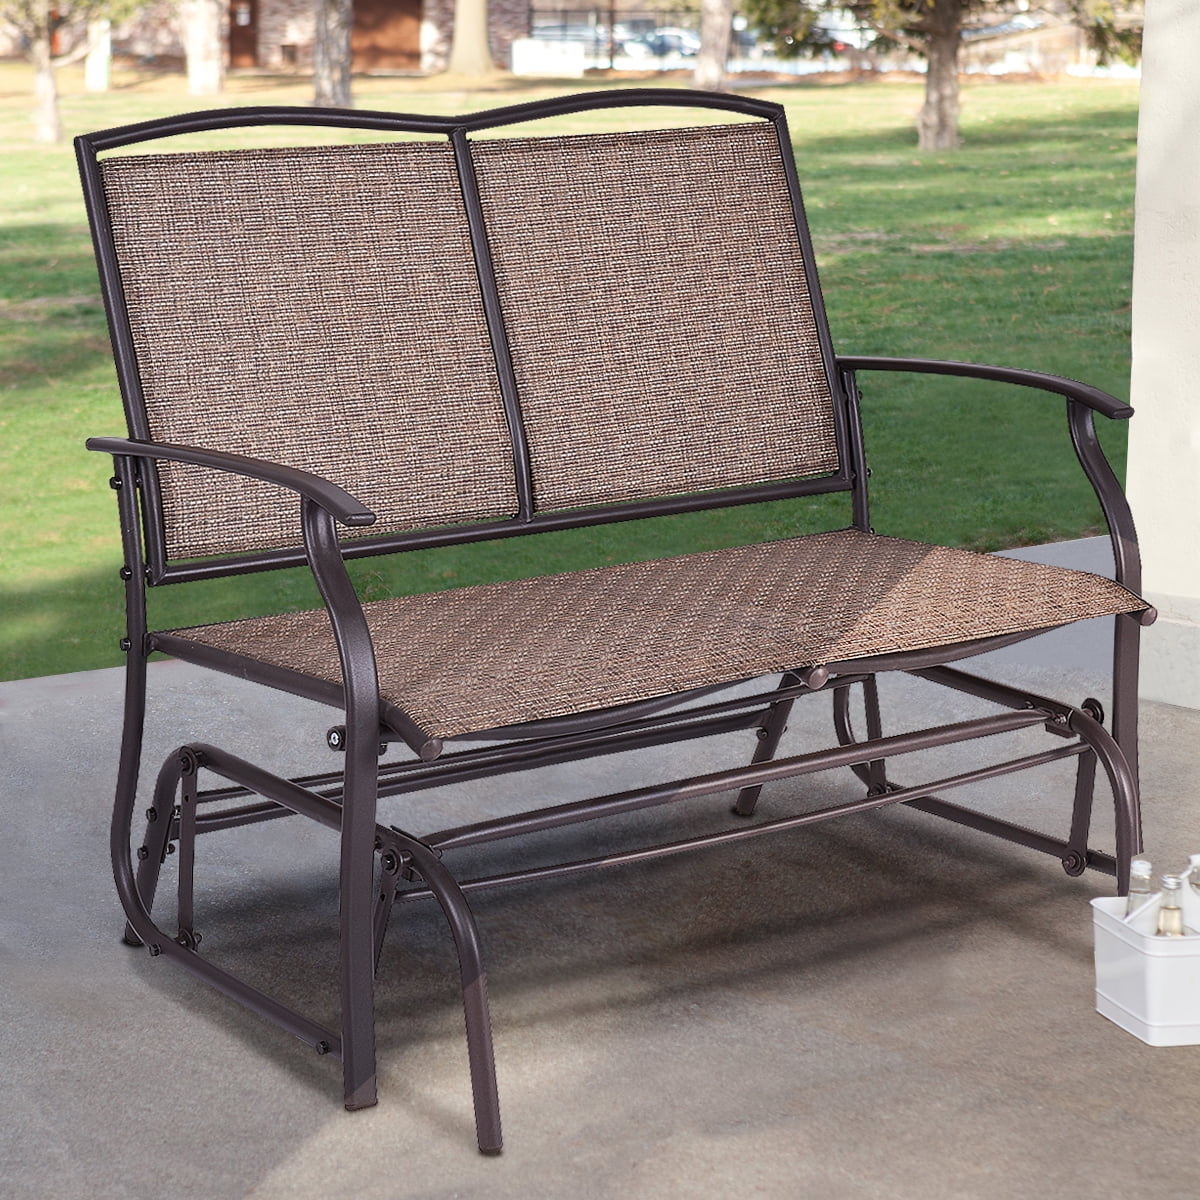 Outdoor Swing Glider 2 Person Patio Rocking Chair Loveseat Bench Furniture Yard 